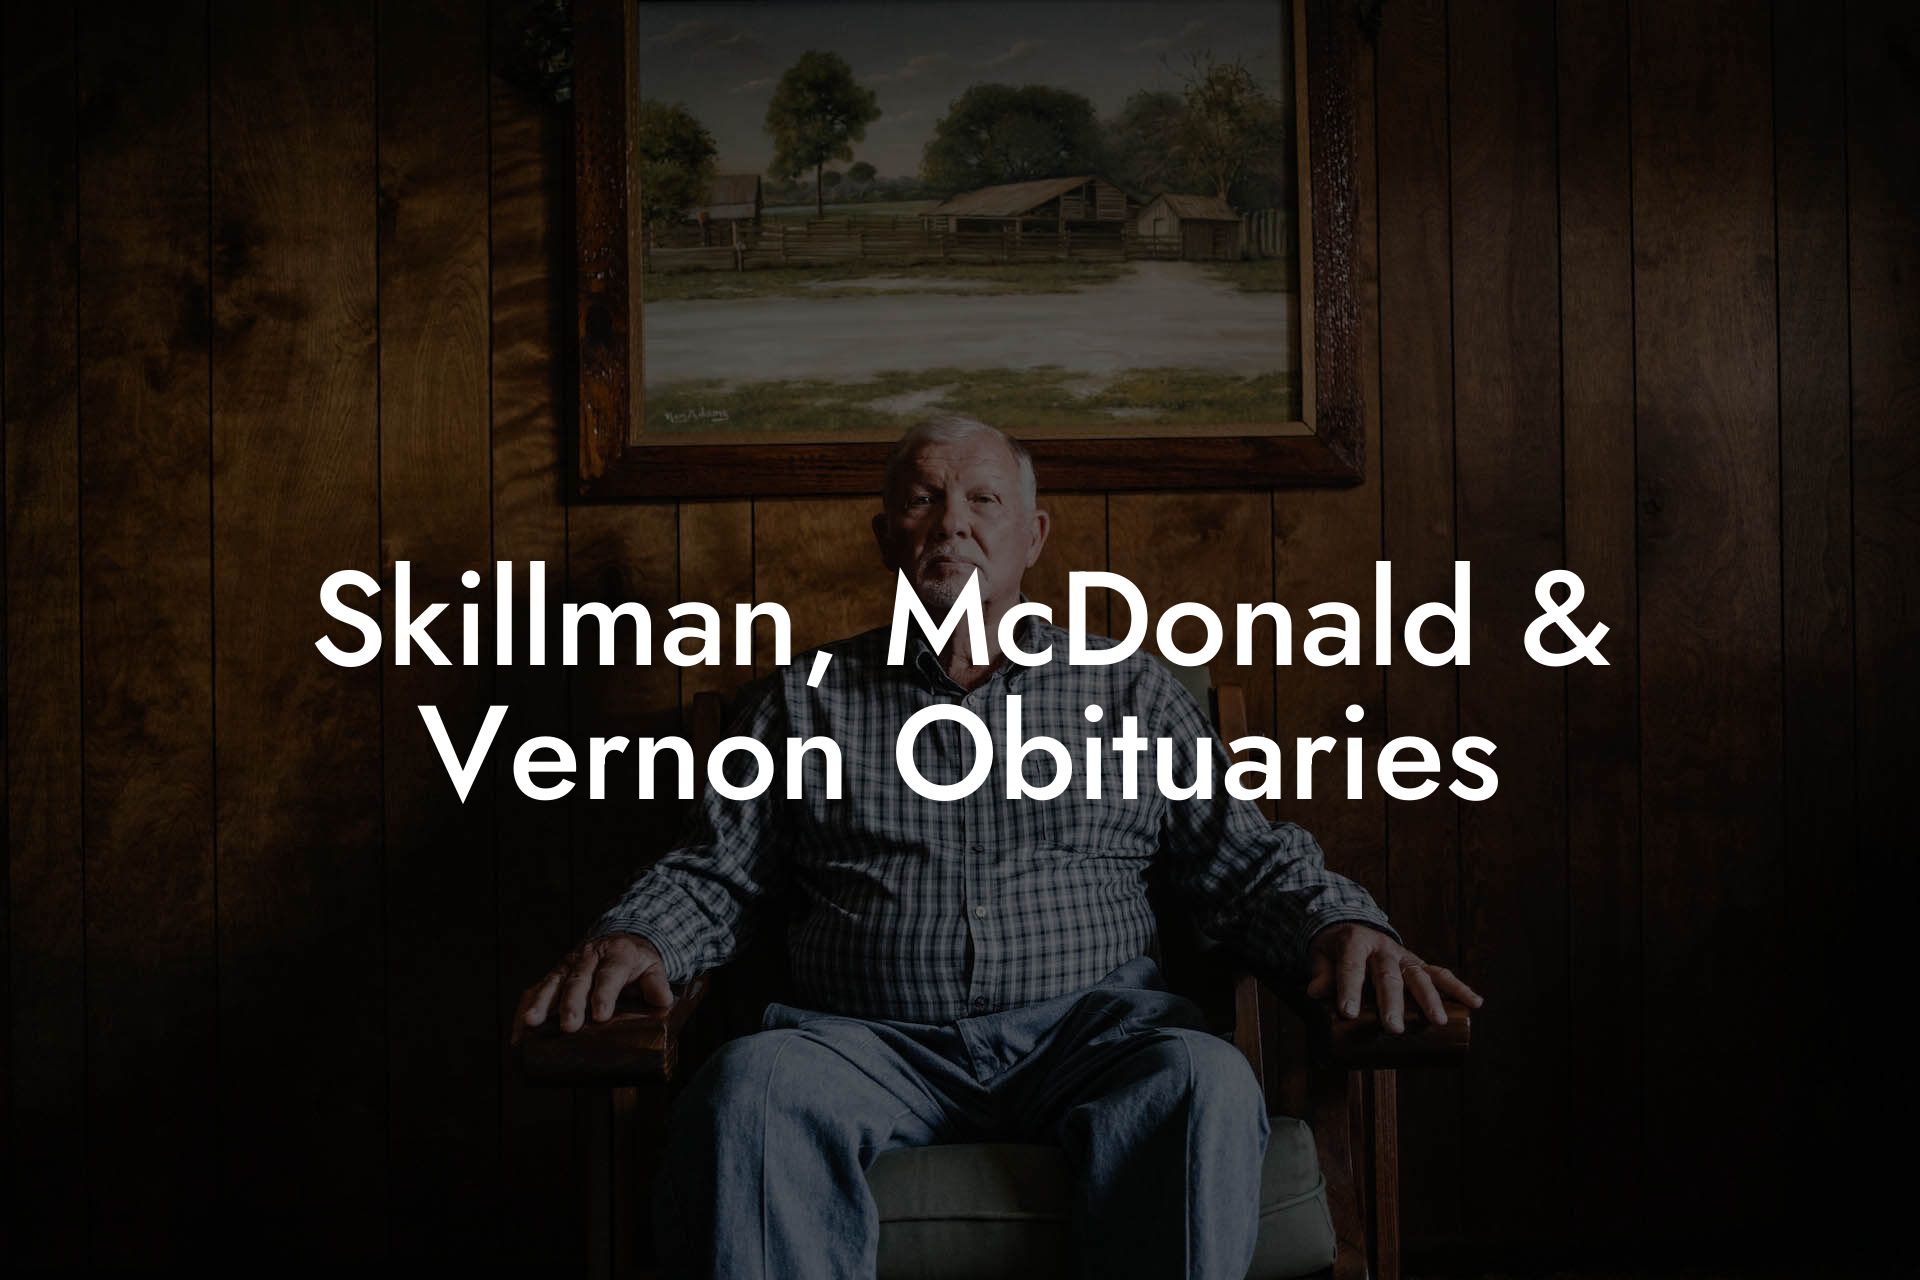 Skillman, McDonald & Vernon Obituaries